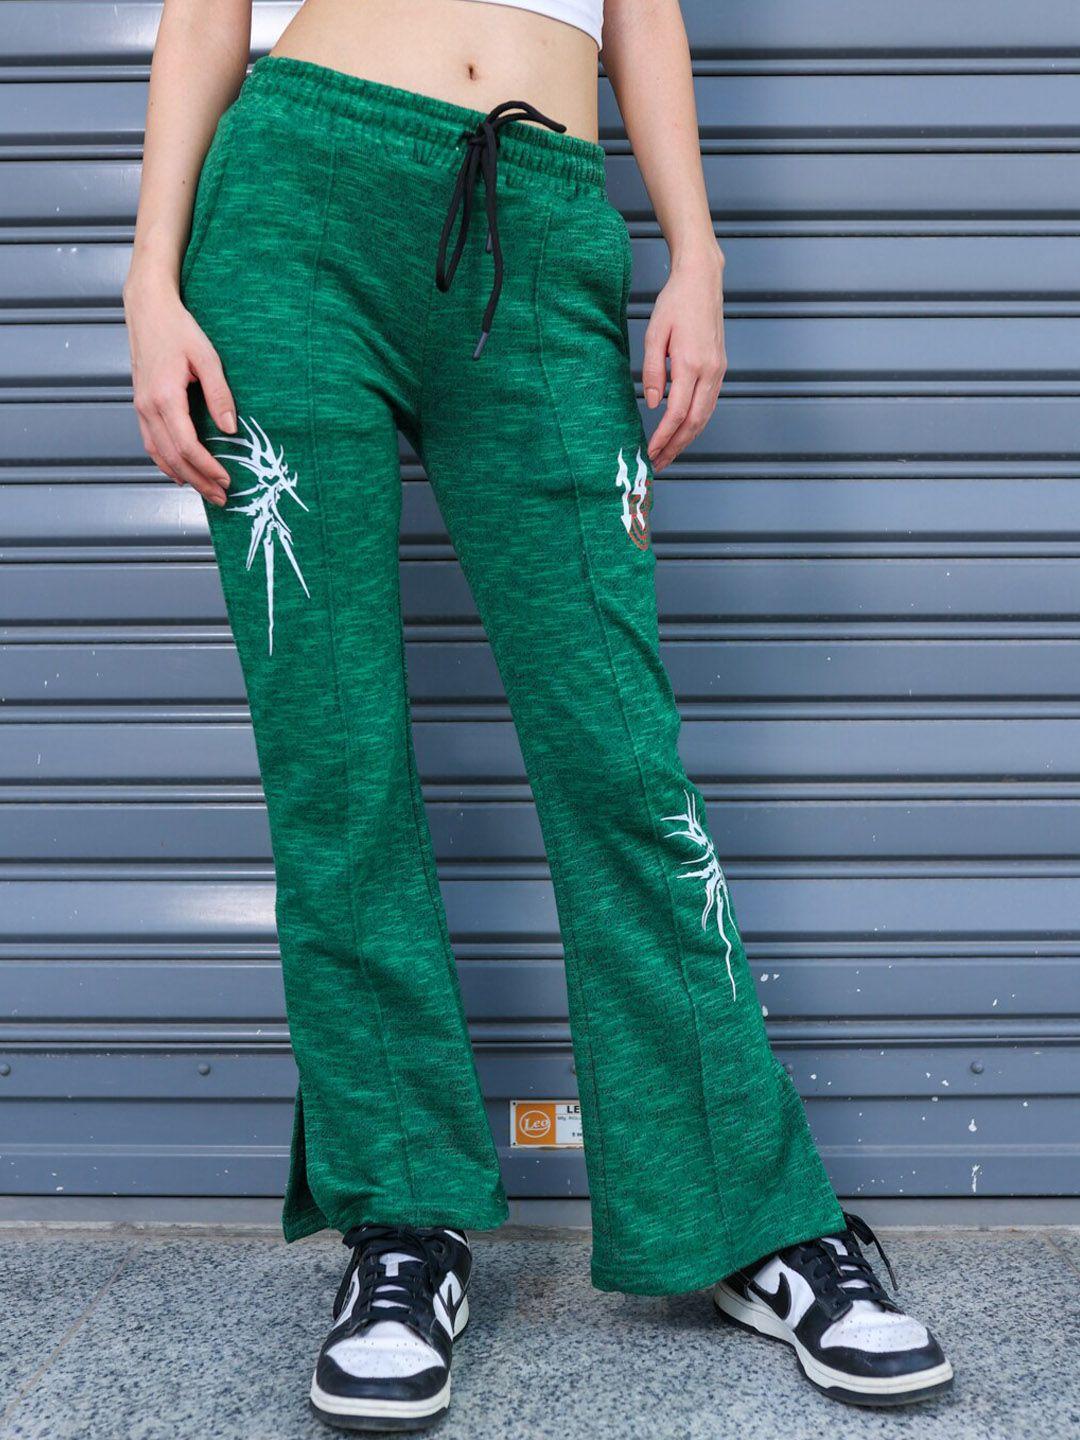 stylecast-x-hersheinbox-women-green-trousers